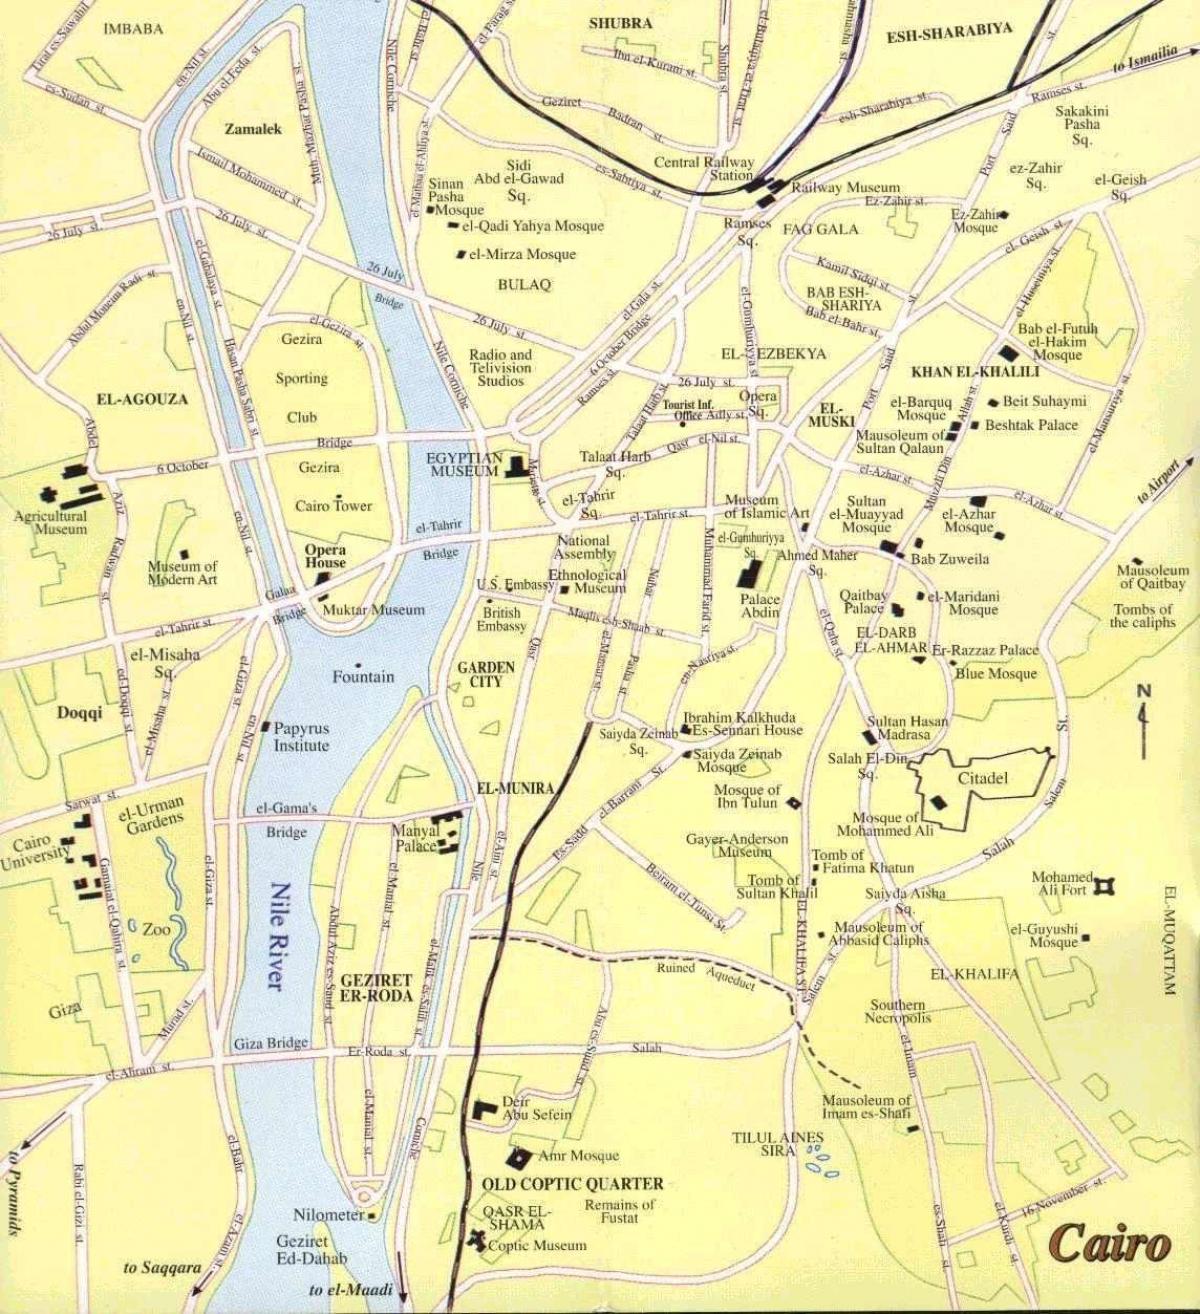 Mapa ulic Kairu